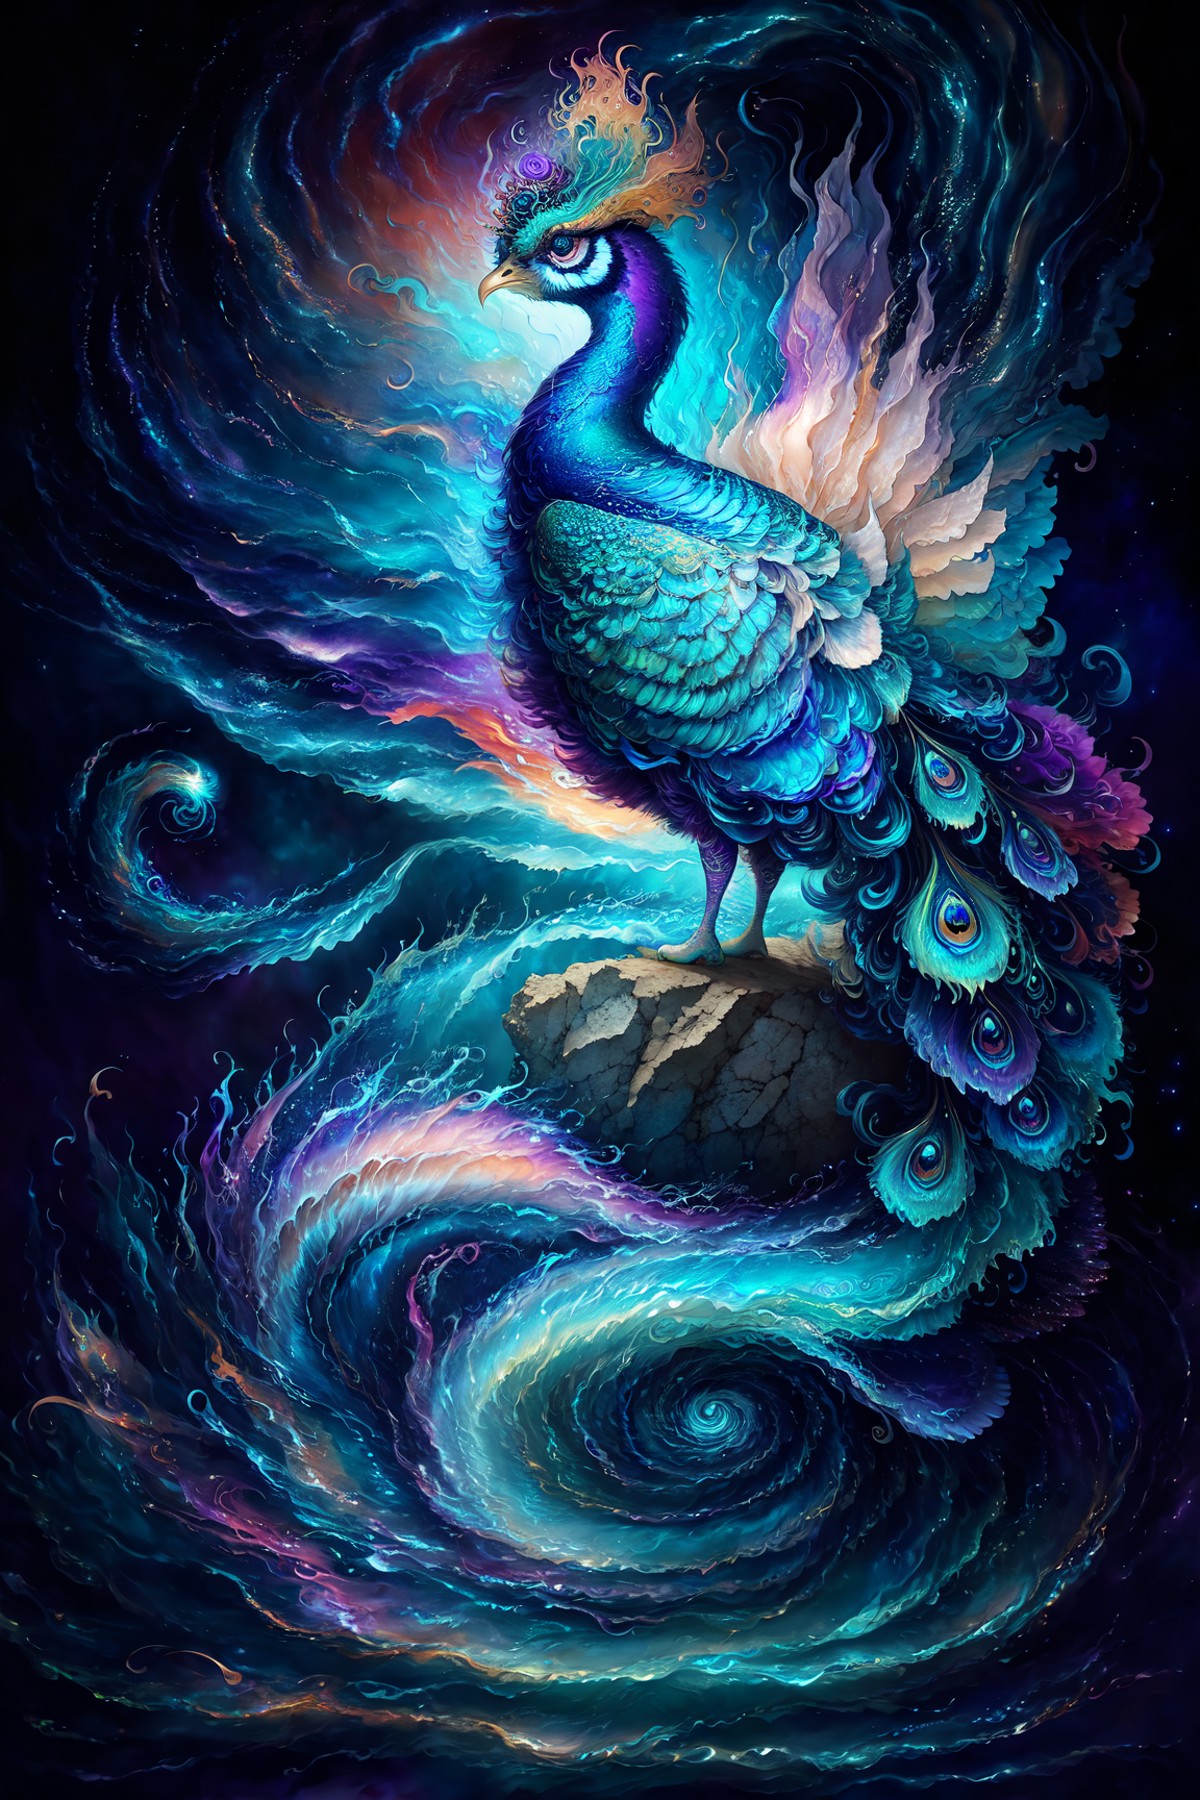 Style-SwirlMagic, Portrait of a beautiful peacock, by Ismail Inceoglu, Gazelli, james jean, Anton Fadeev and Yoshitaka Ama...